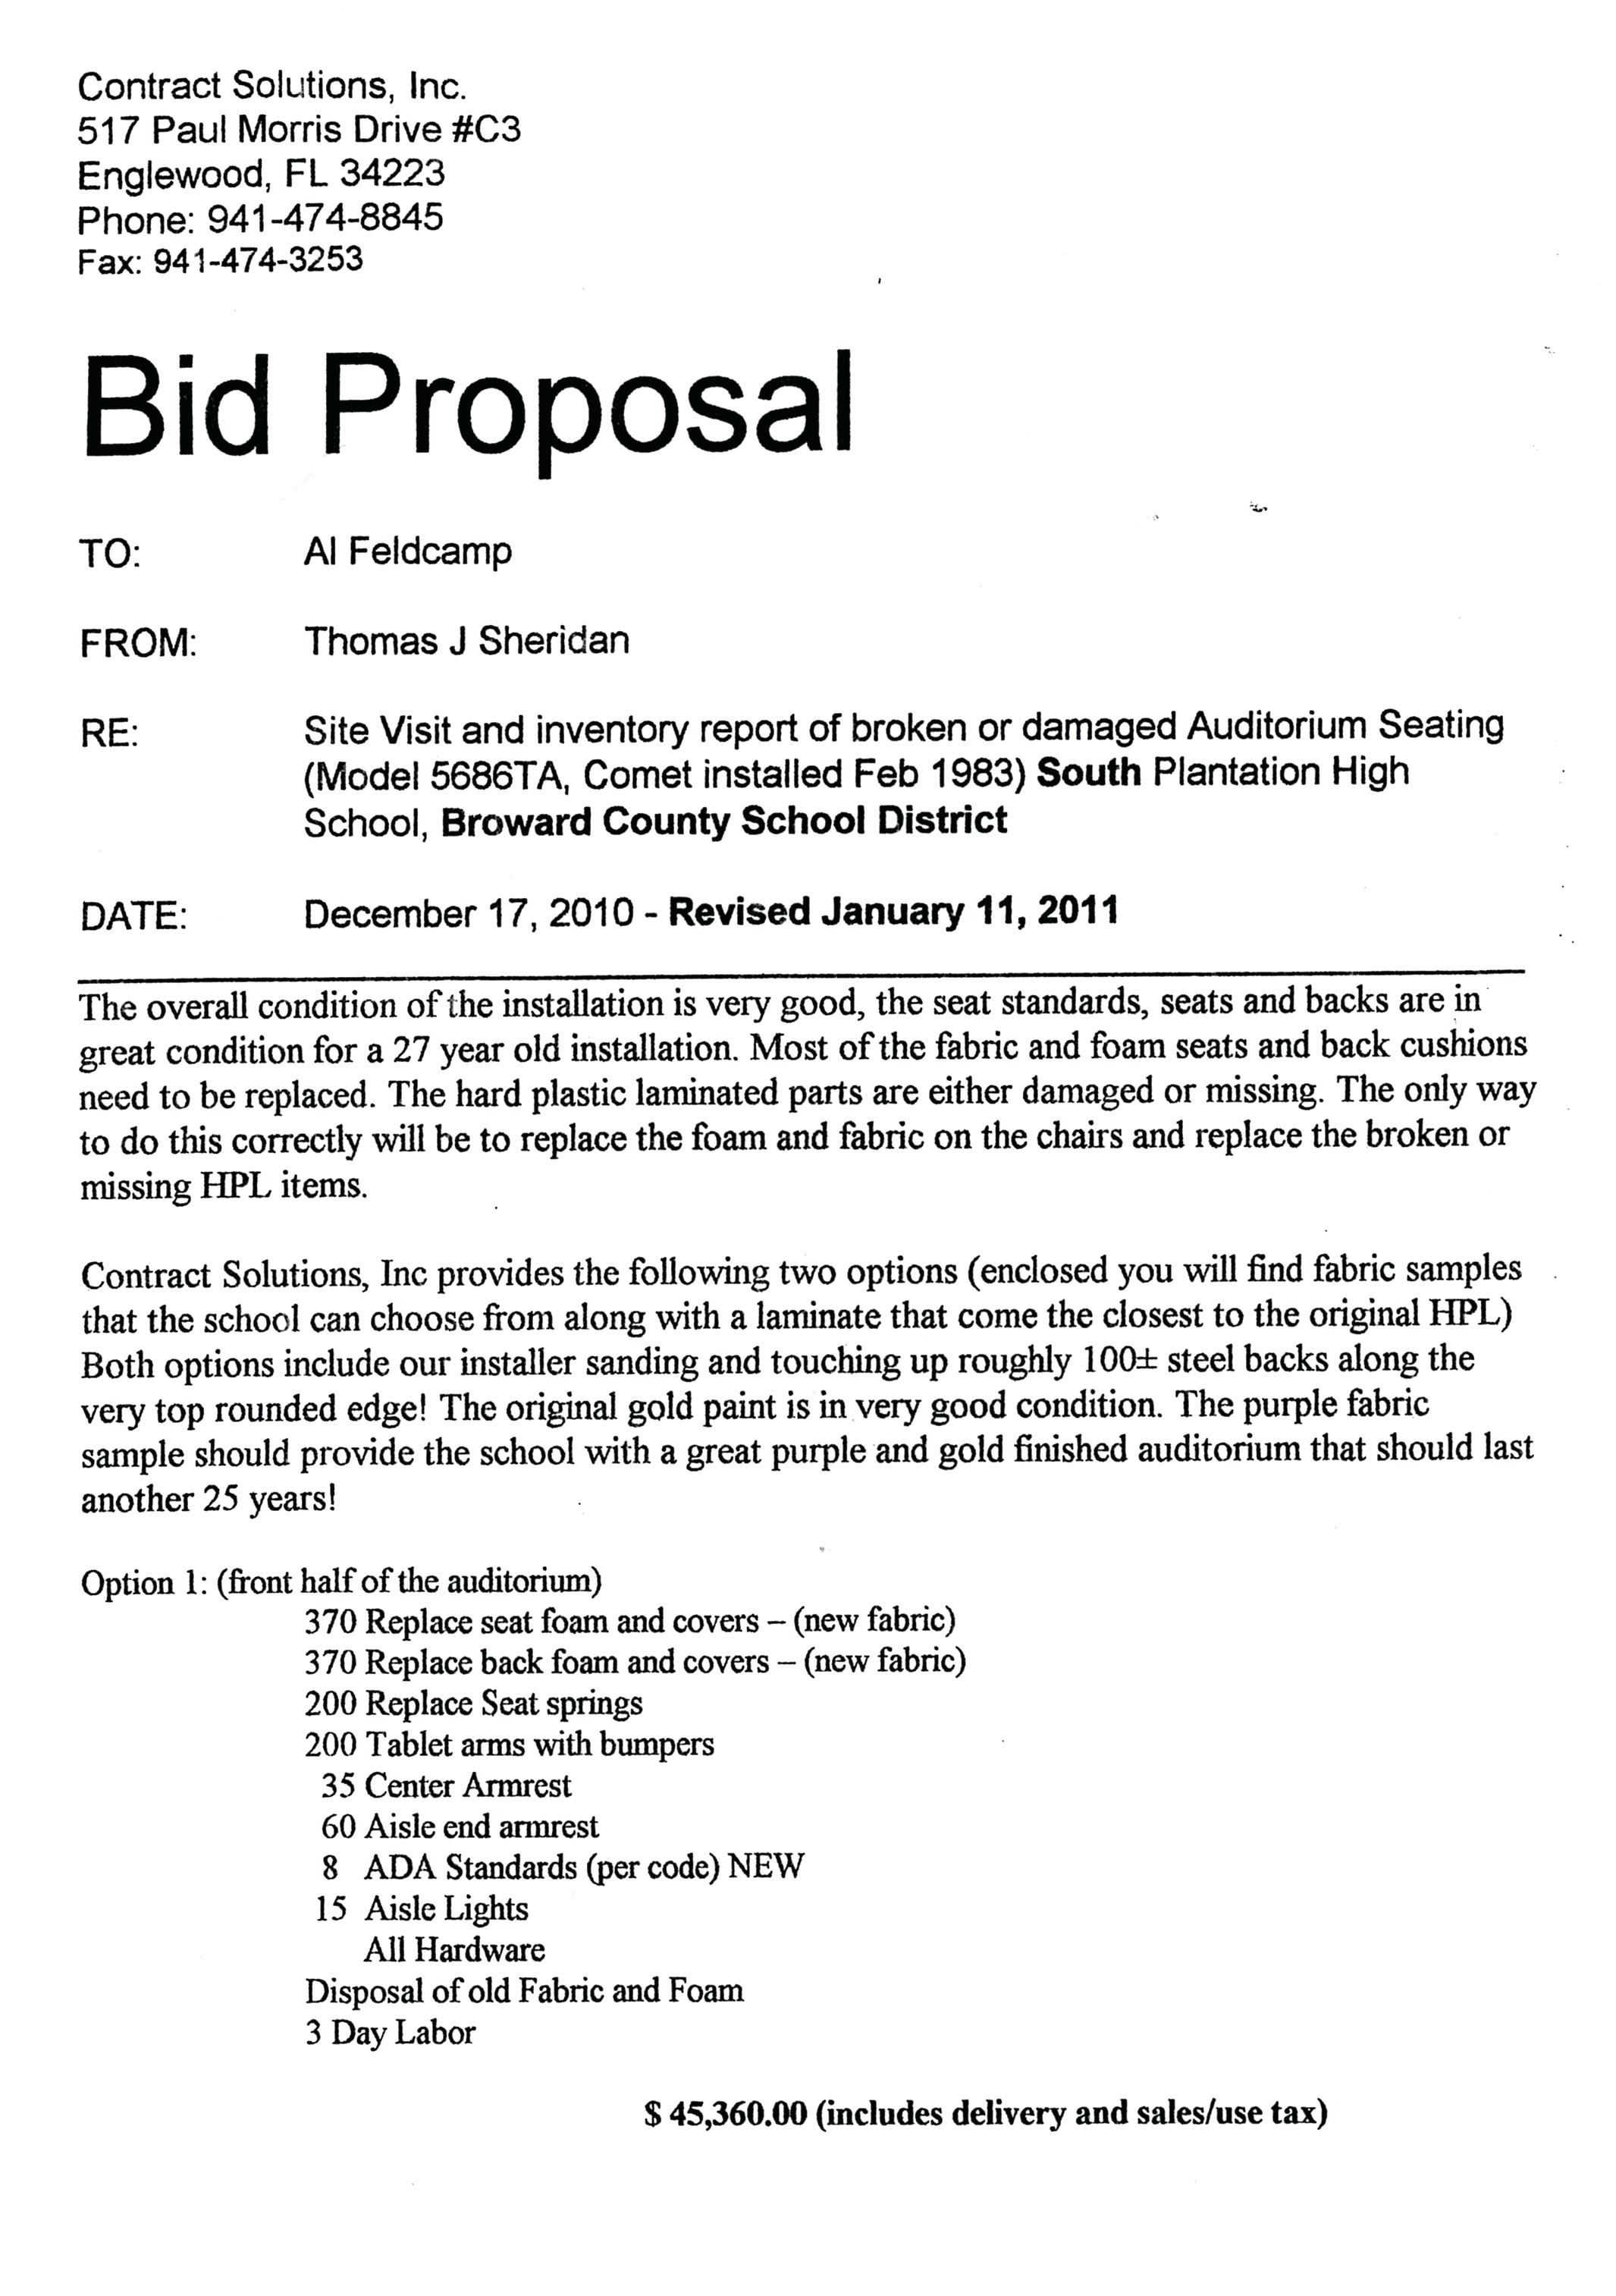 Sealed Bid Offer Letter Template - Famous Bid Proposal Letter Administrative Ficer Cover